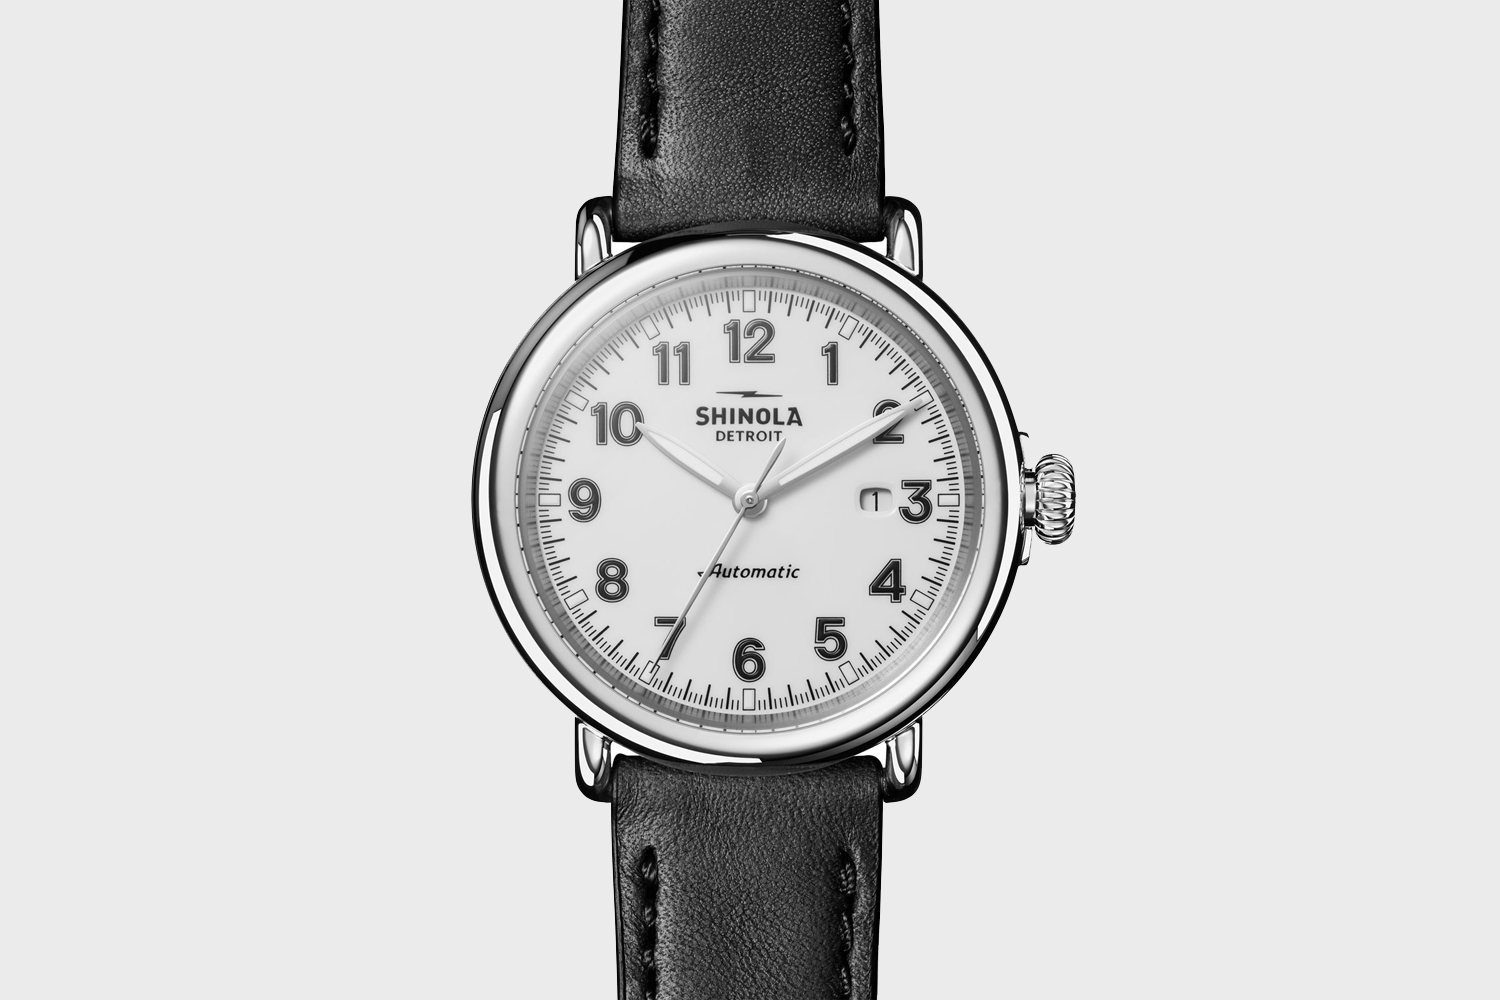 SHINOLA Men's 45mm Runwell Automatic Watch, Black